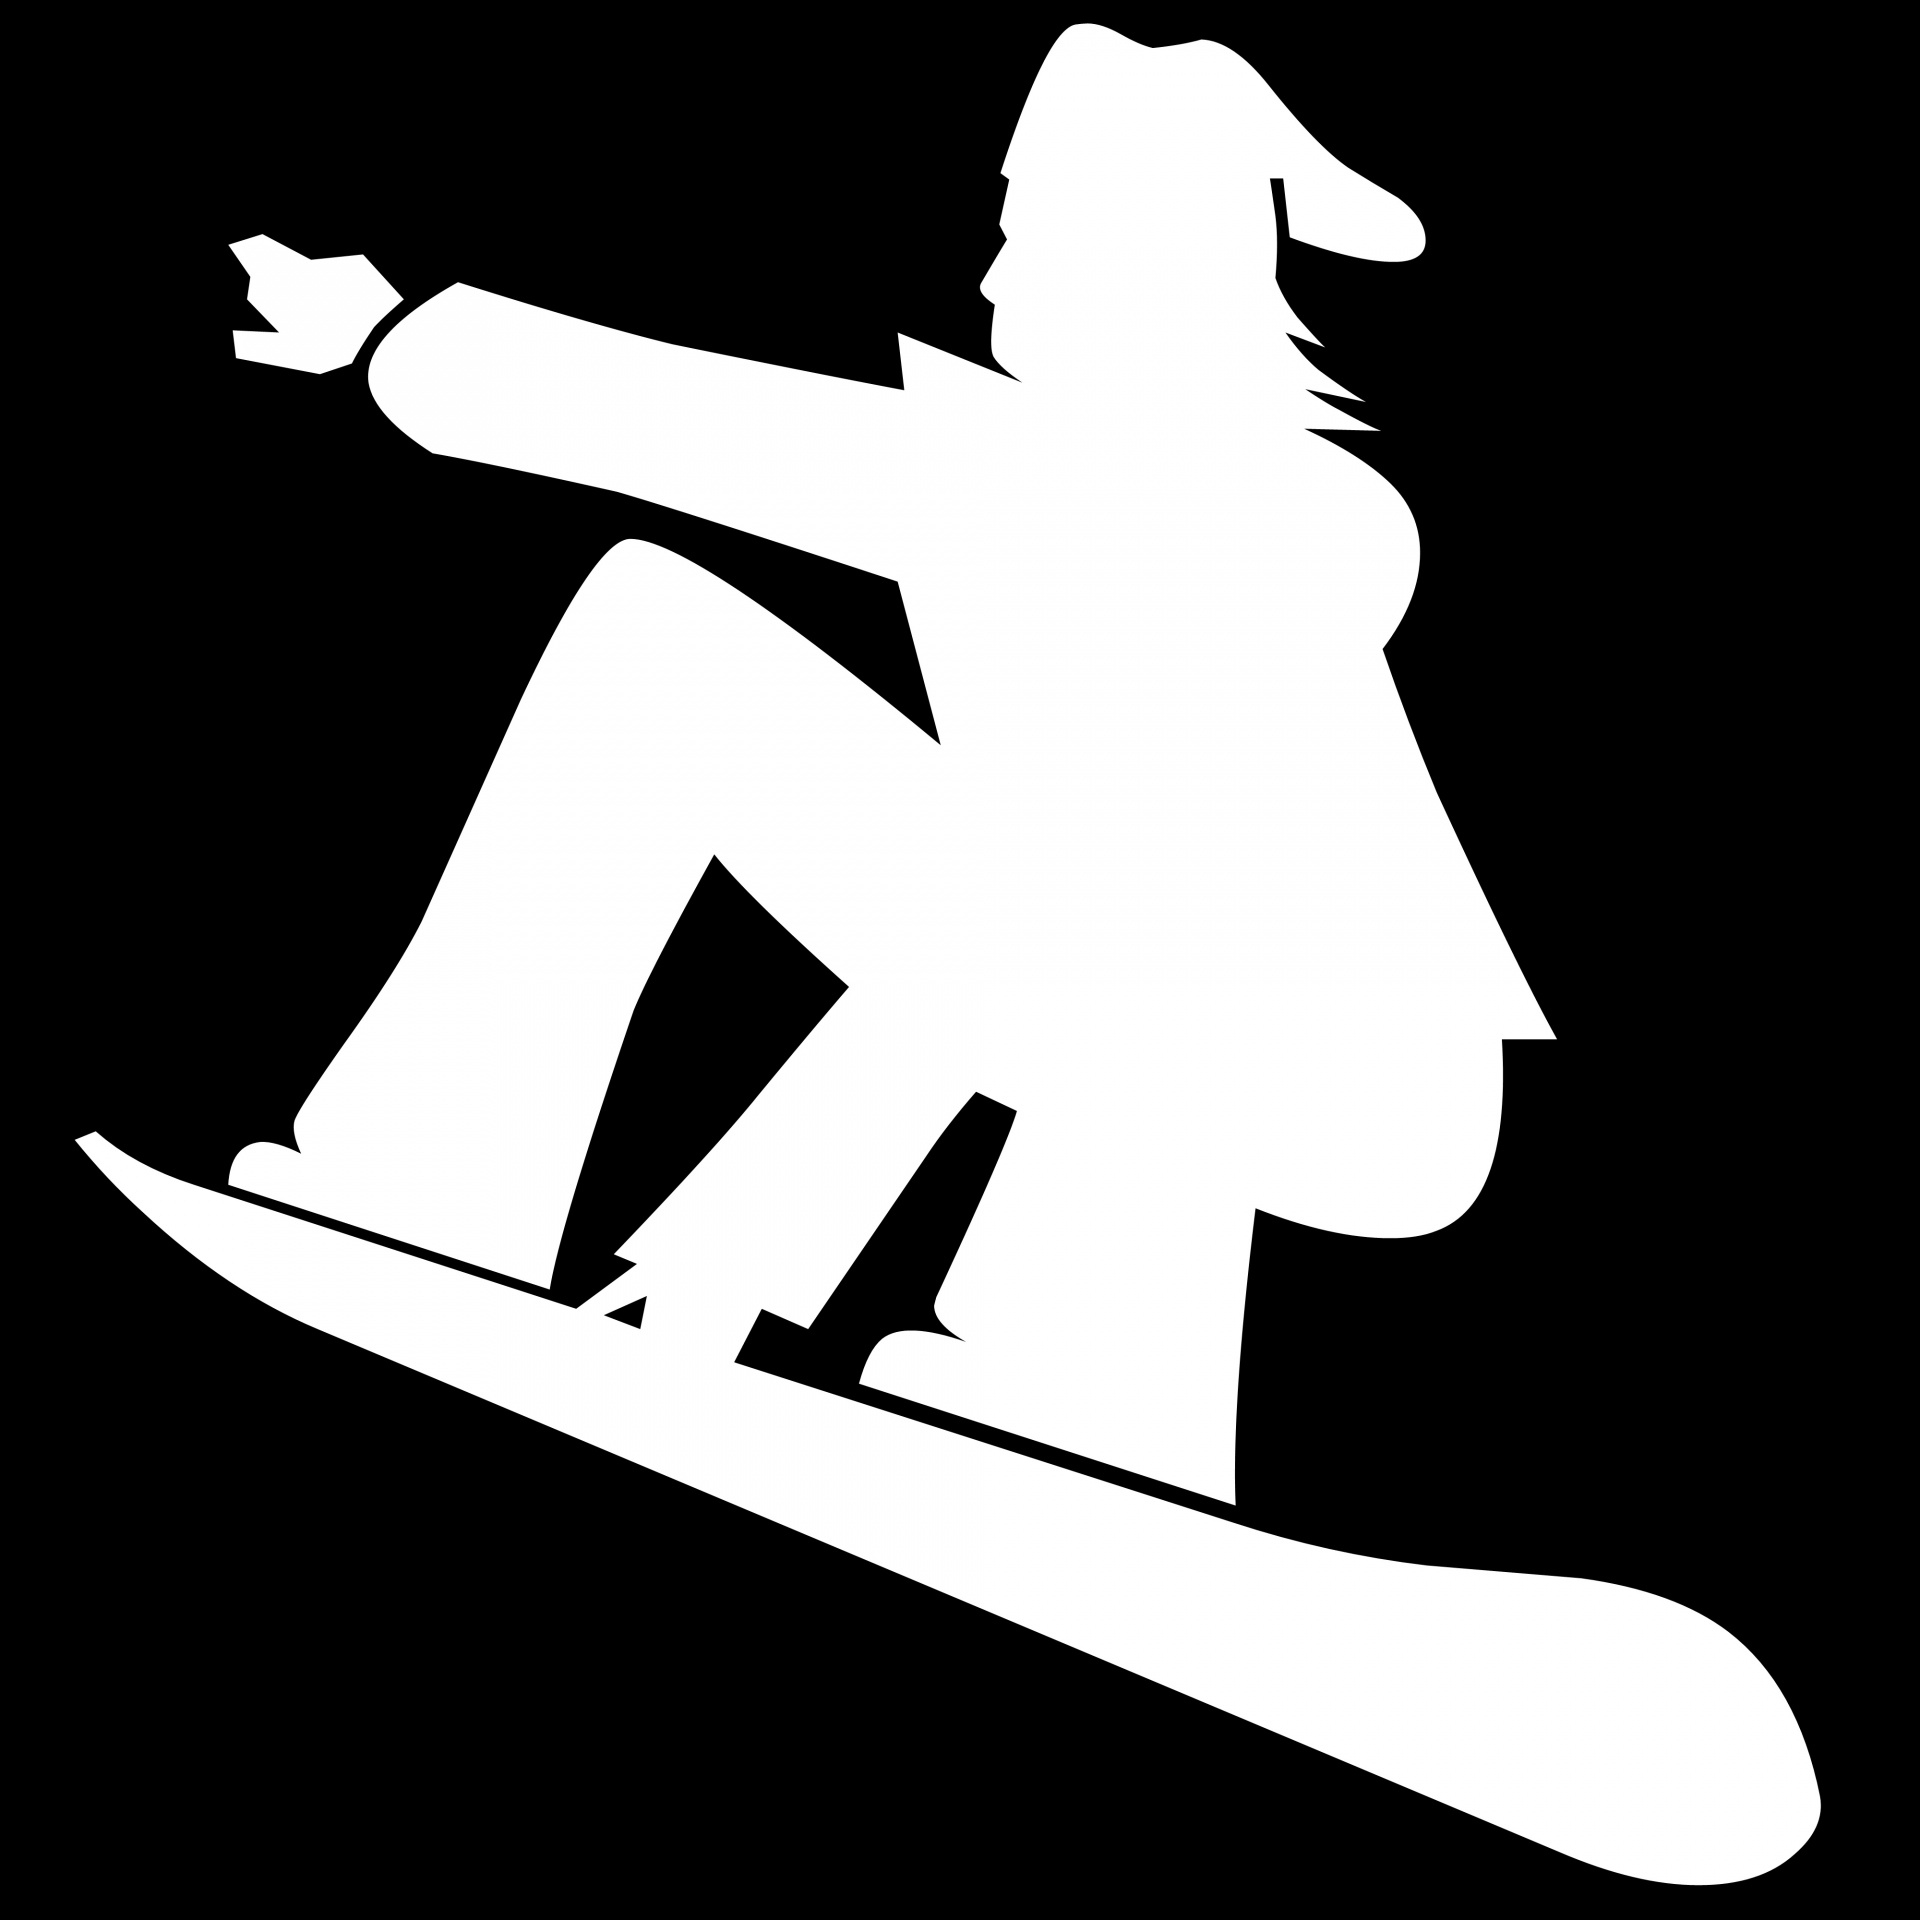 white silhouette snowboarder on black background